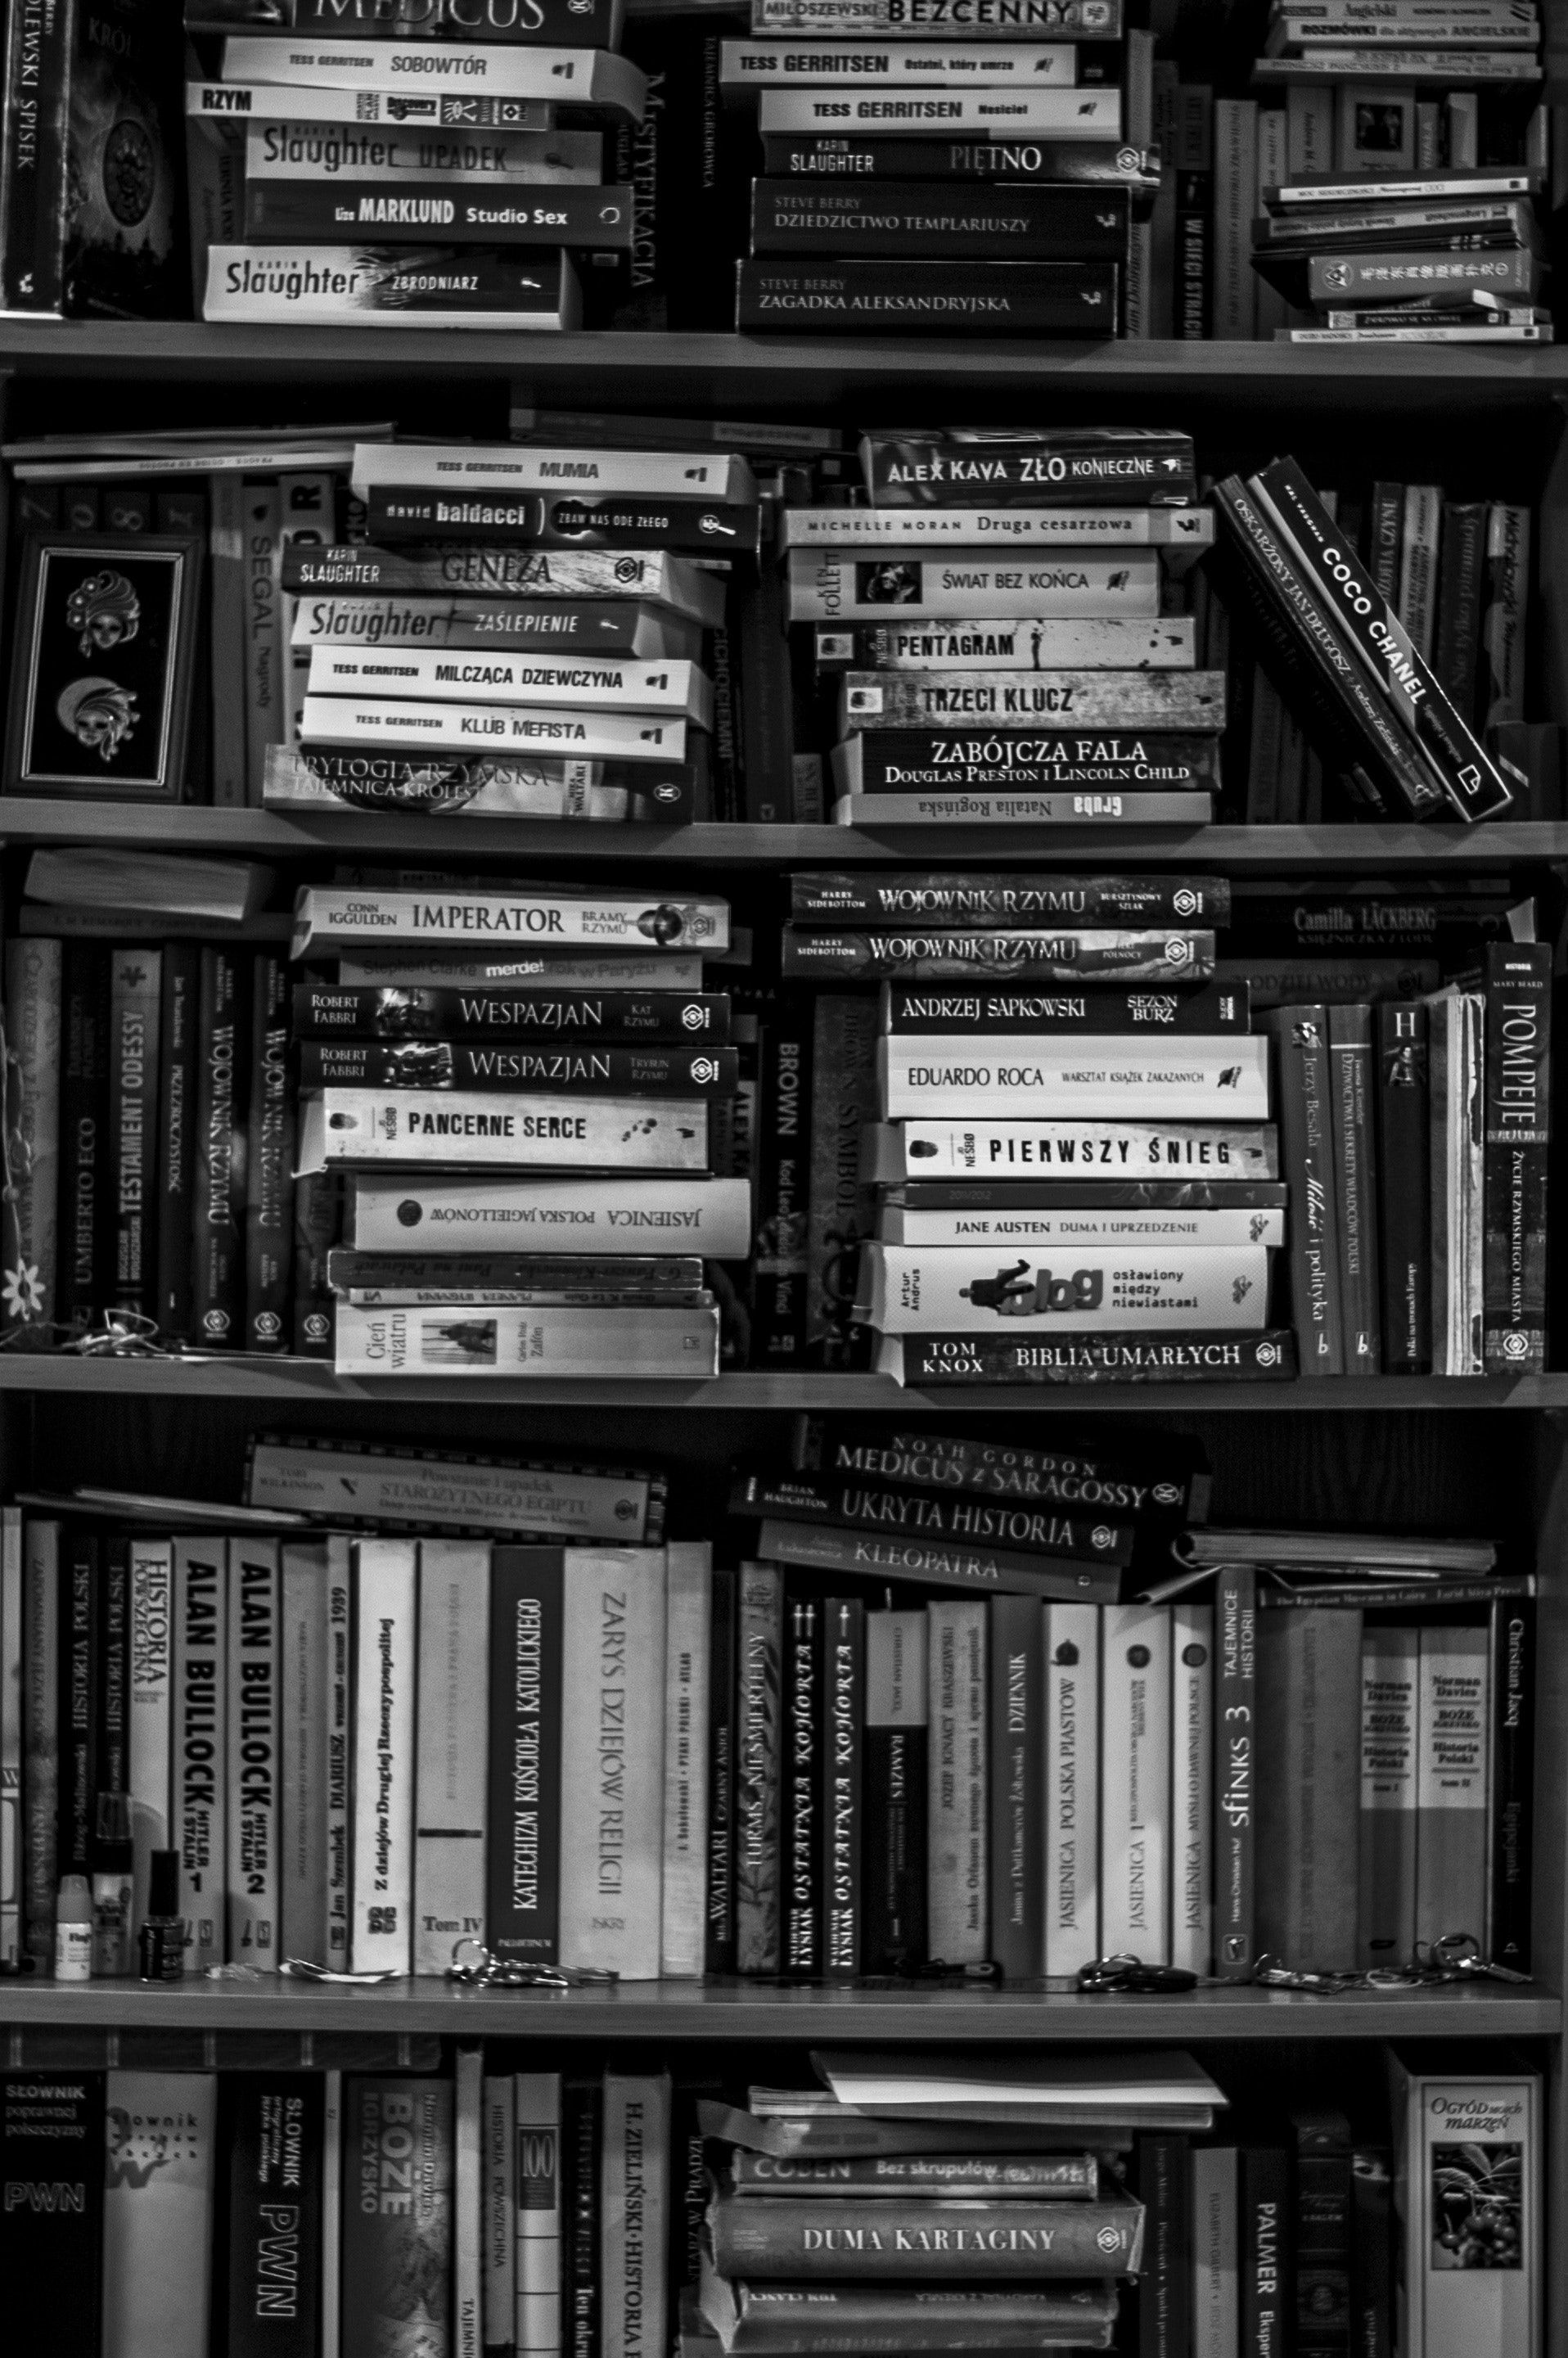 A black and white photo of books on shelves - Bookshelf, books, library